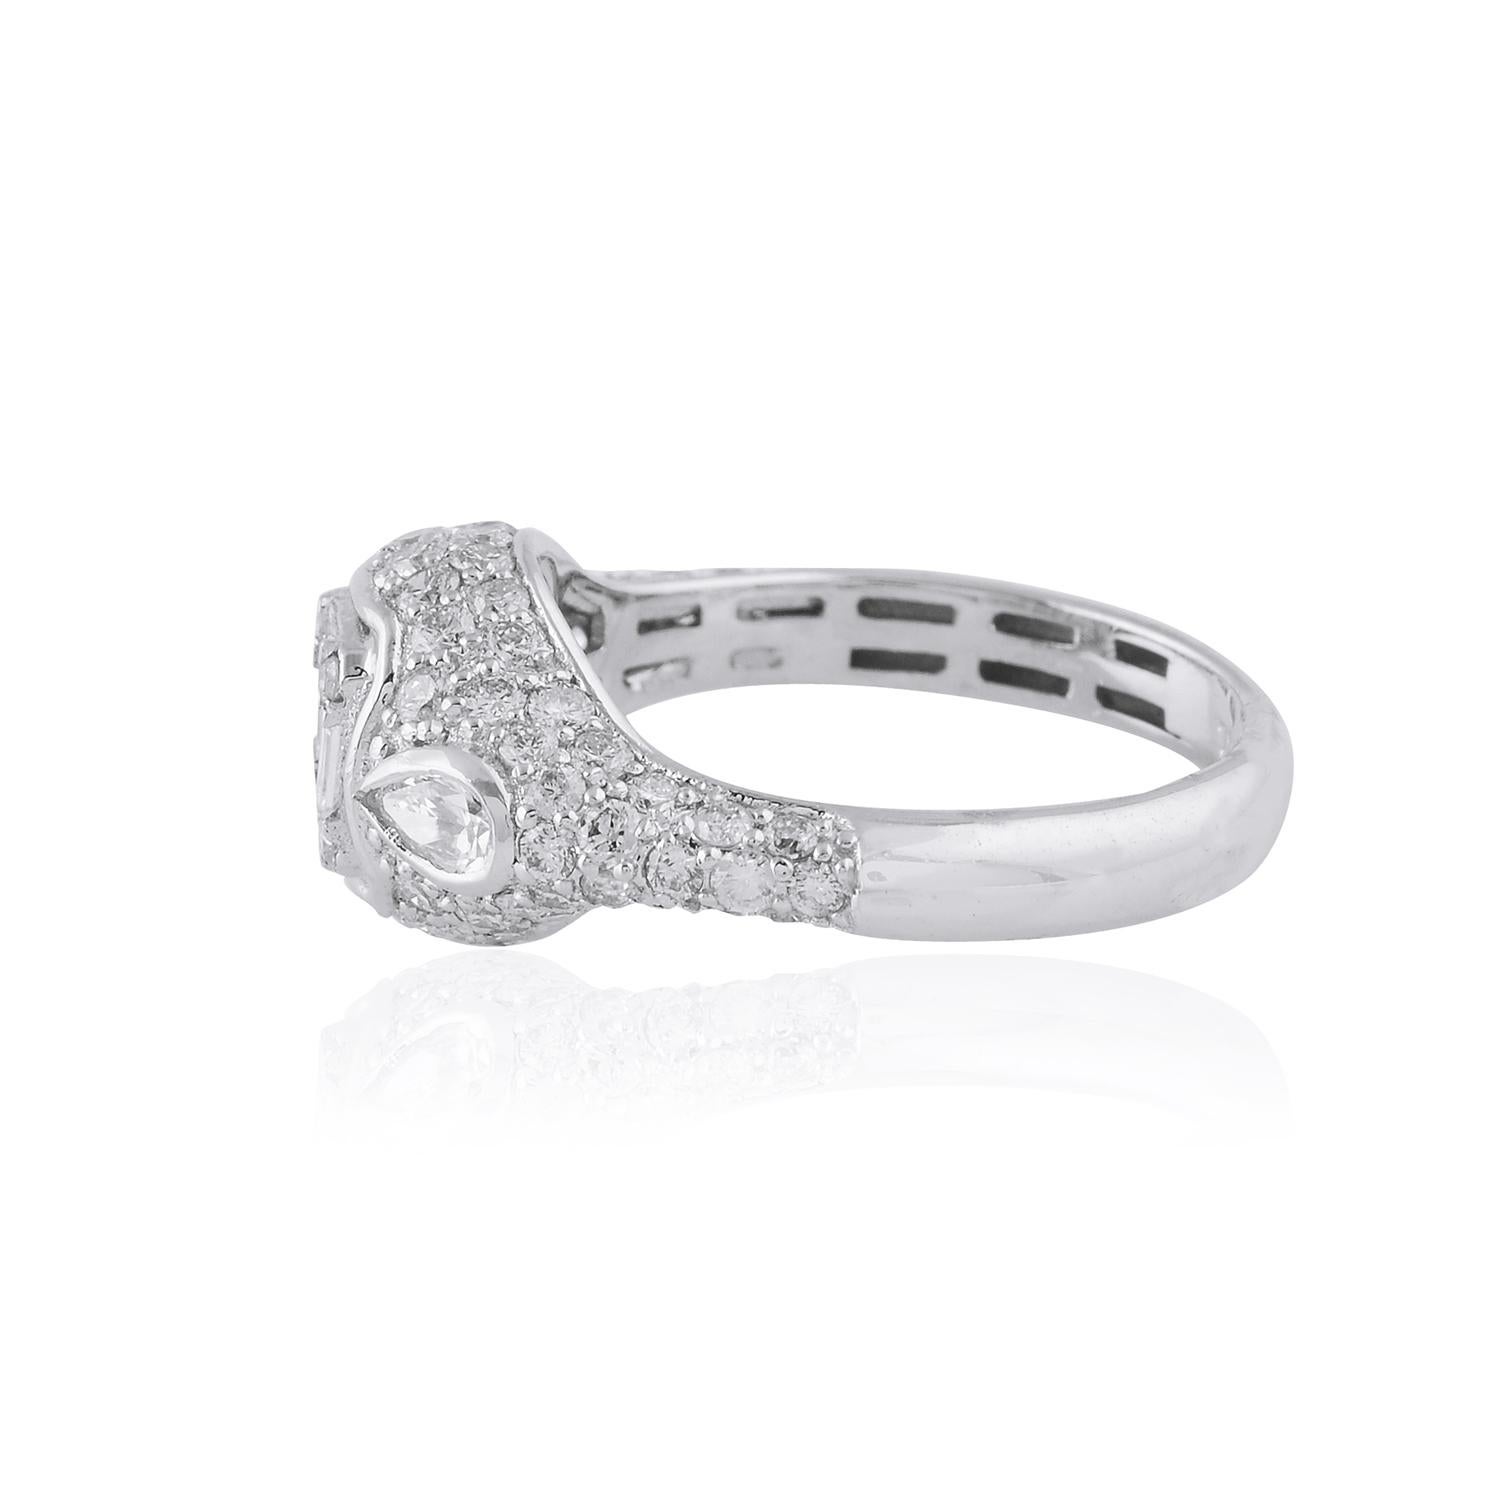 For Sale:  1.80 Carat SI Clarity HI Color Baguette Diamond Ring 18 Karat White Gold Jewelry 4